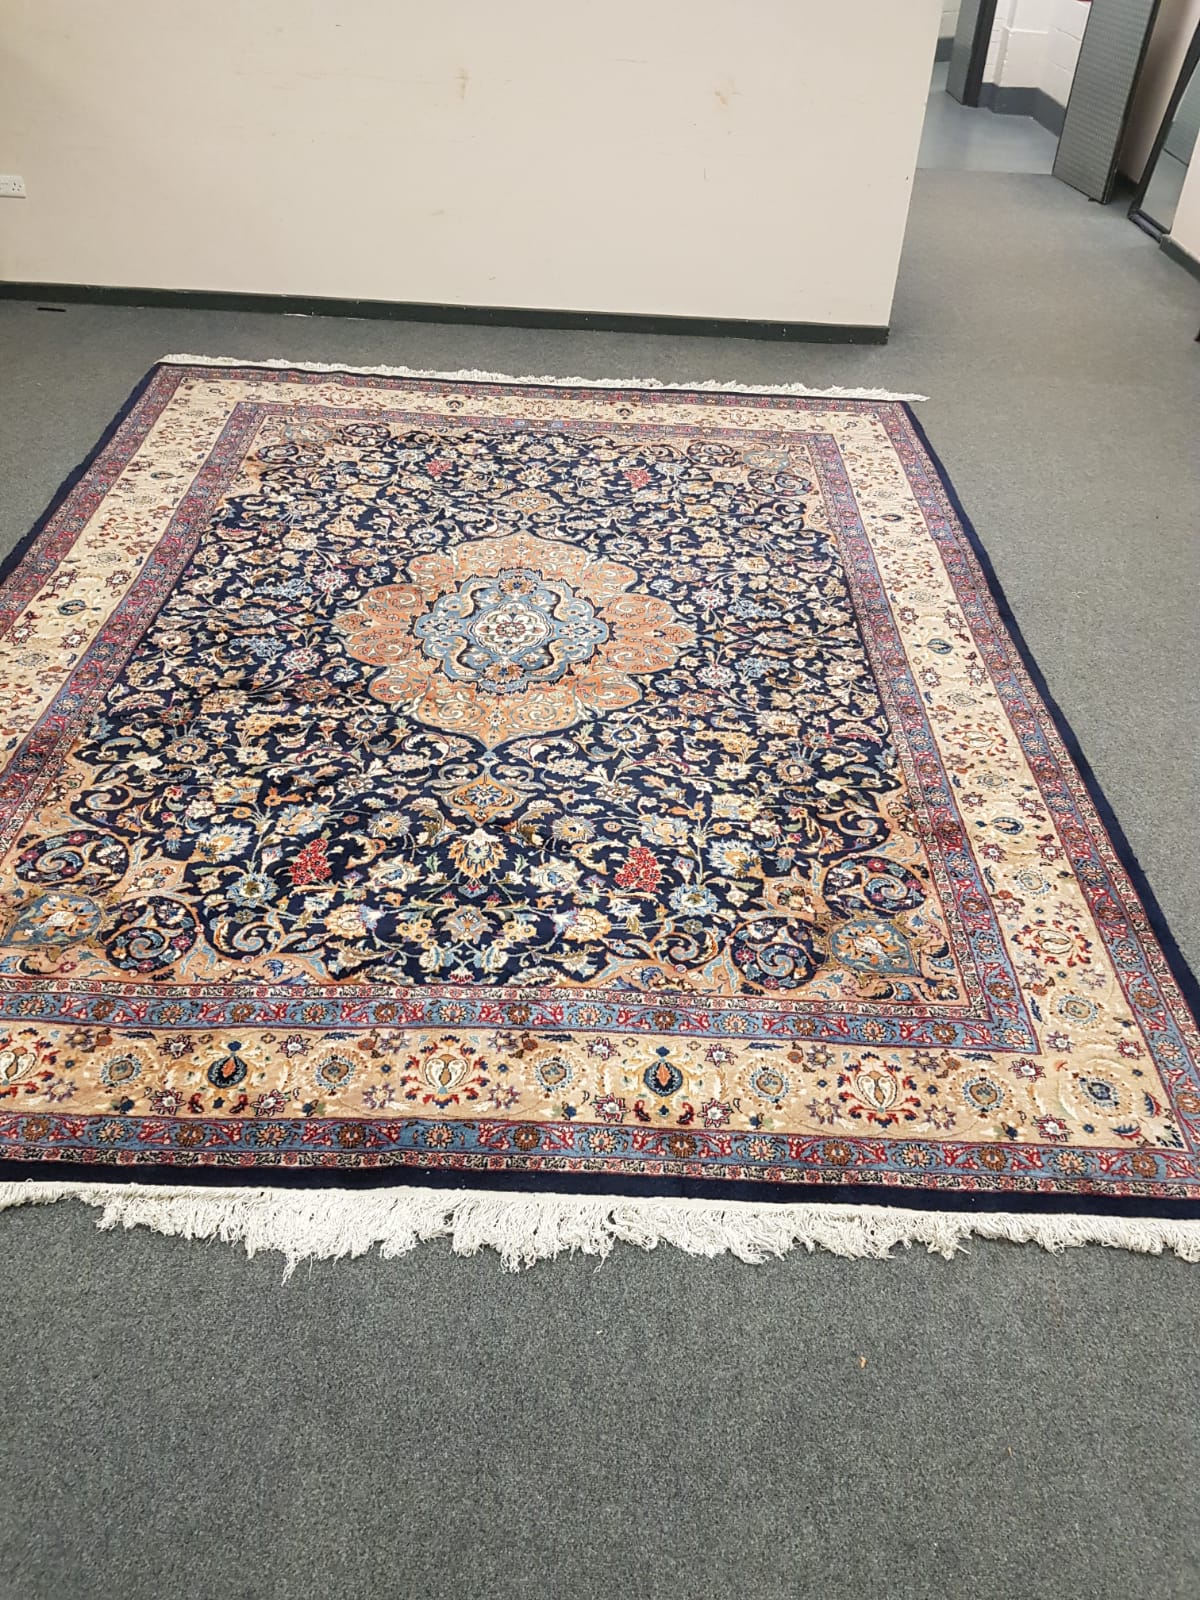 A Kachmar carpet, on blue ground,